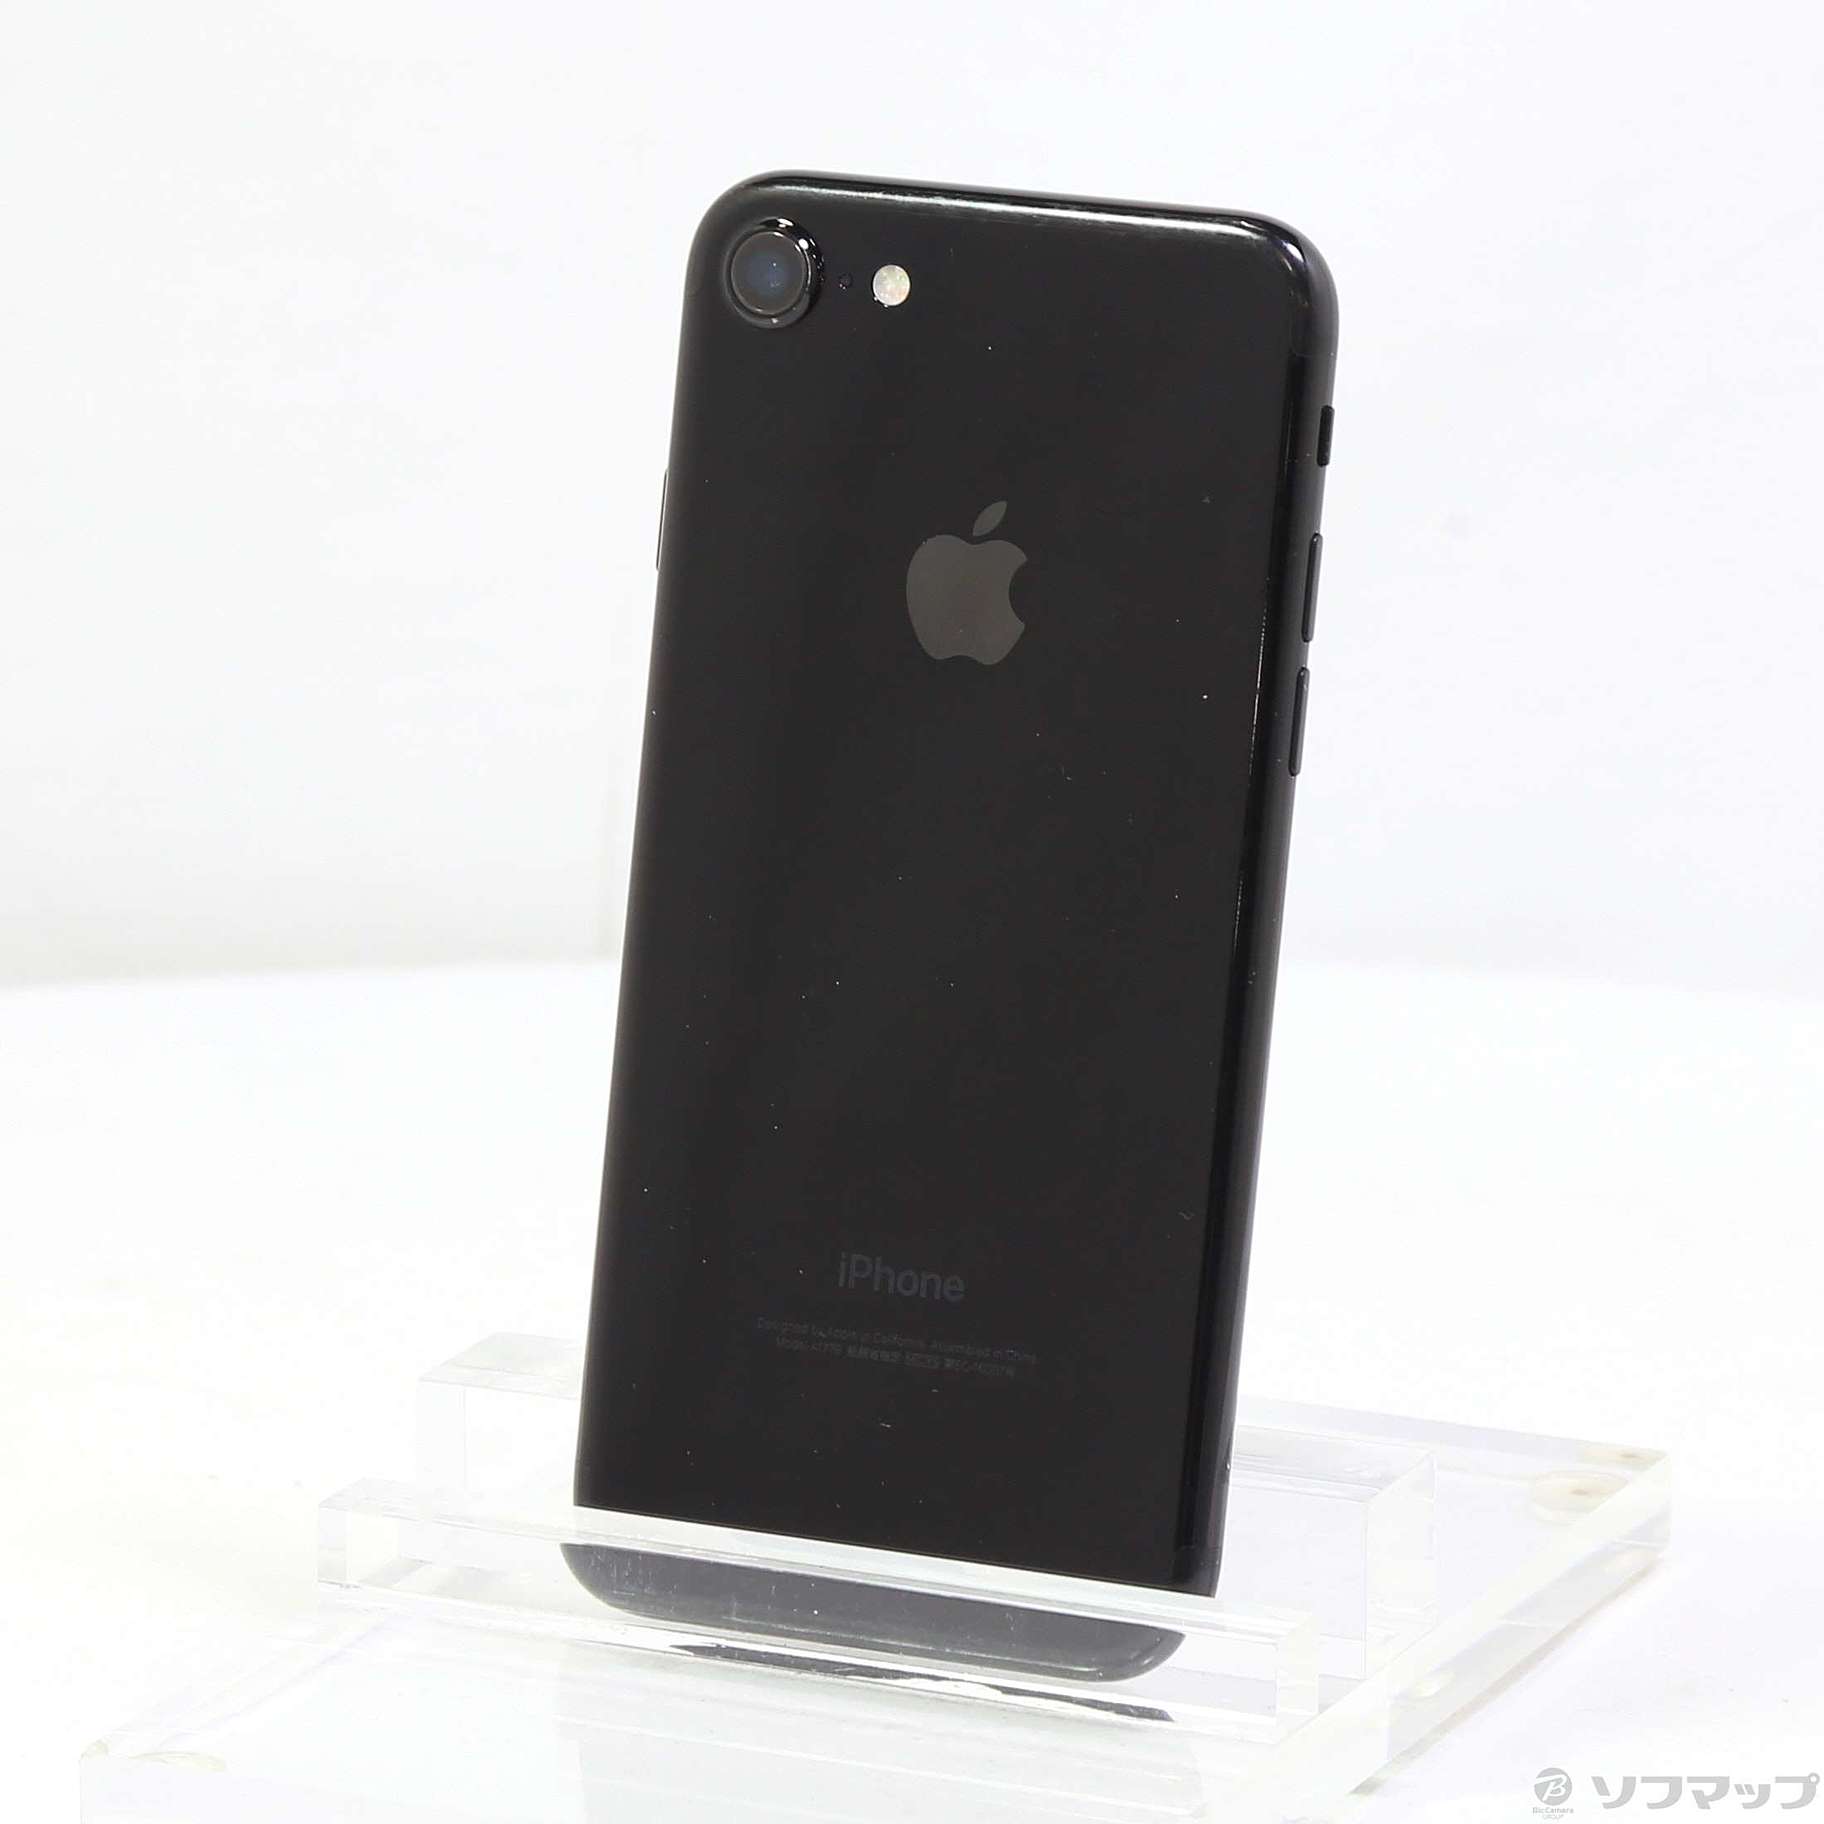 iPhone 7 Jet Black 128 GB Softbank - スマートフォン本体